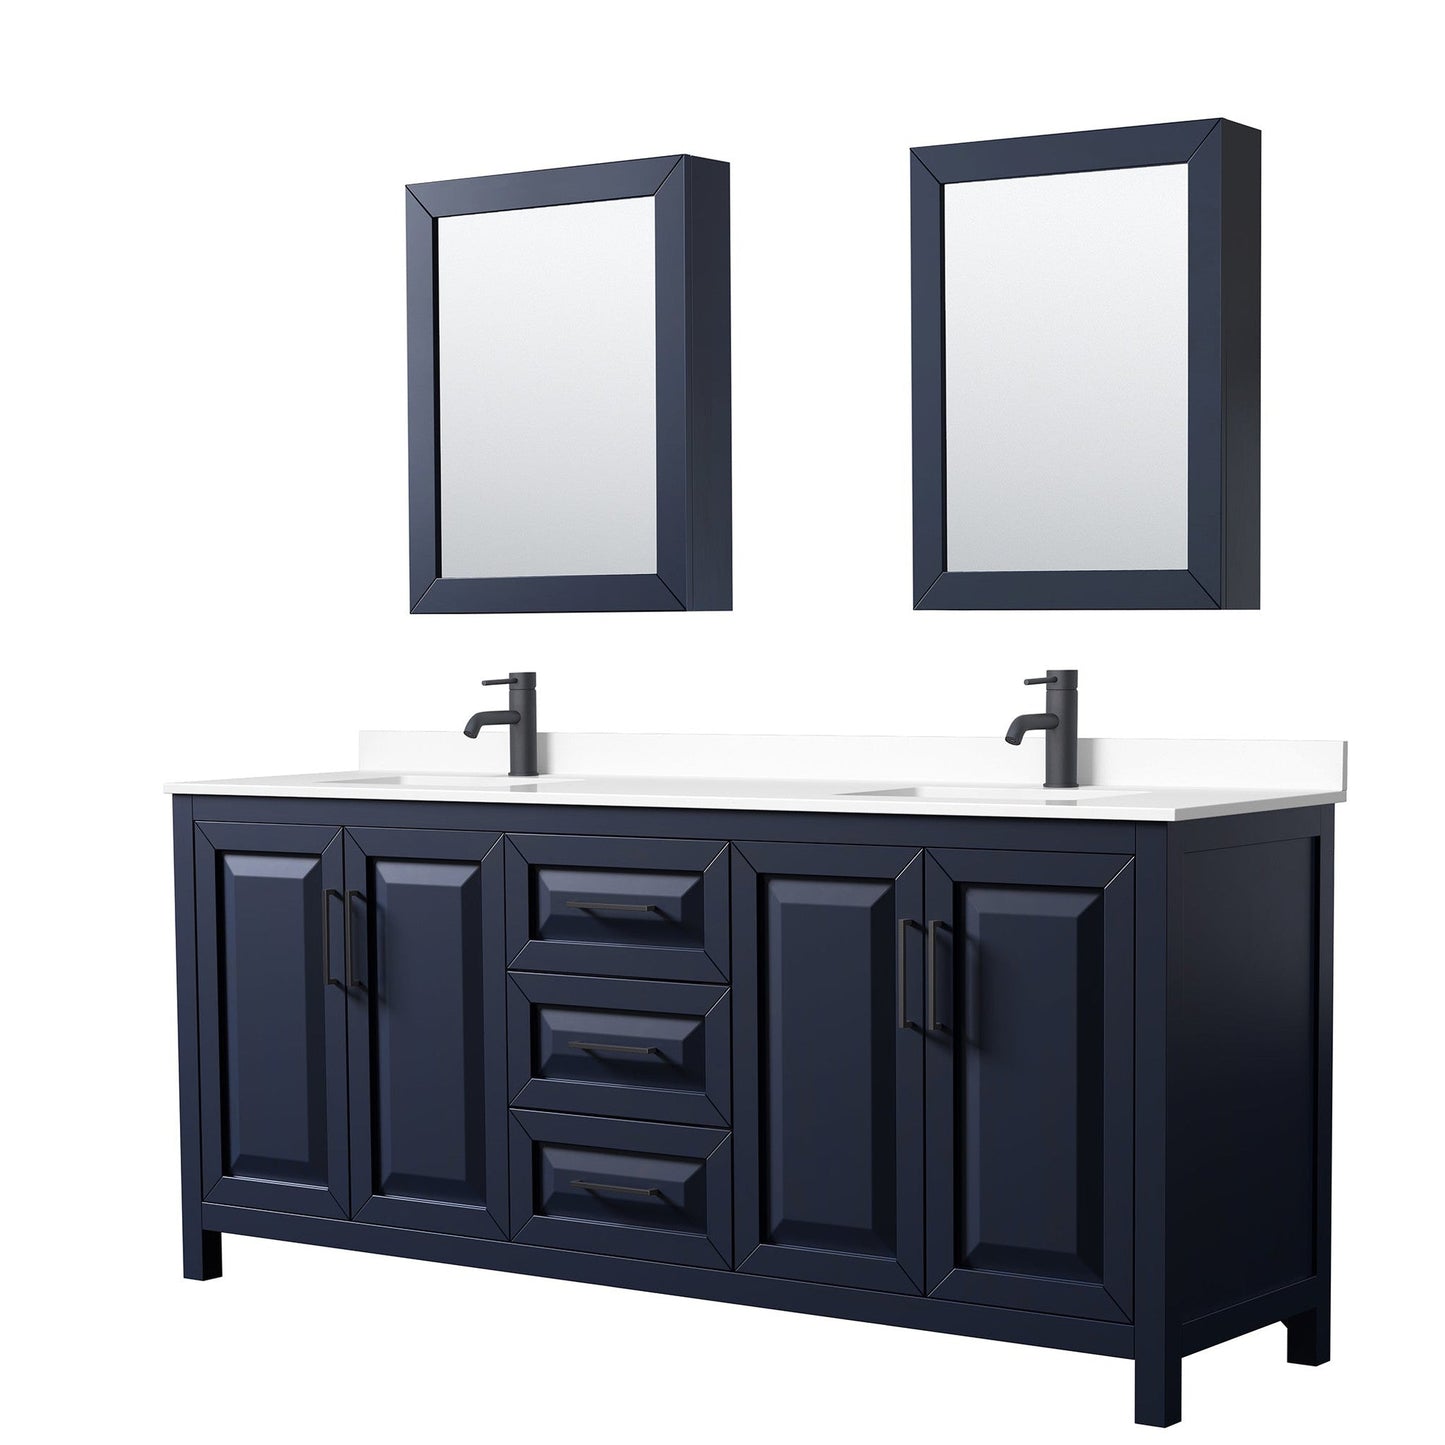 Daria 80" Double Bathroom Vanity in Dark Blue, White Cultured Marble Countertop, Undermount Square Sinks, Matte Black Trim, Medicine Cabinets